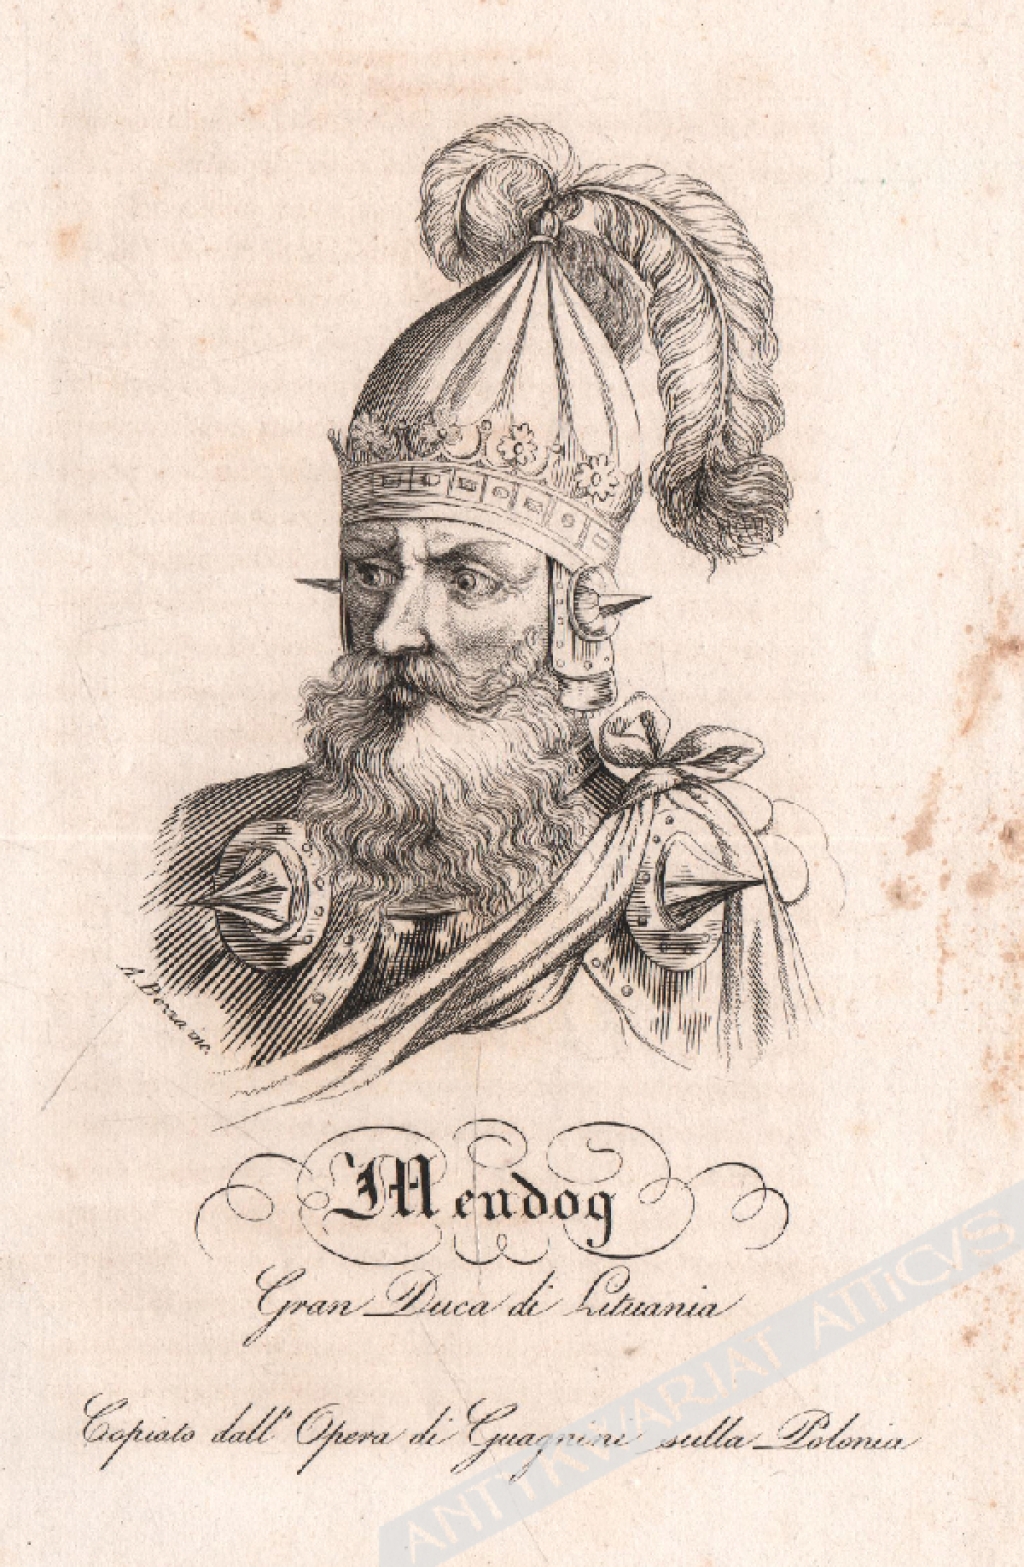 [rycina, 1831] [Mendog - wielki książę litewski ] Mendog Gran Duca di Lituania